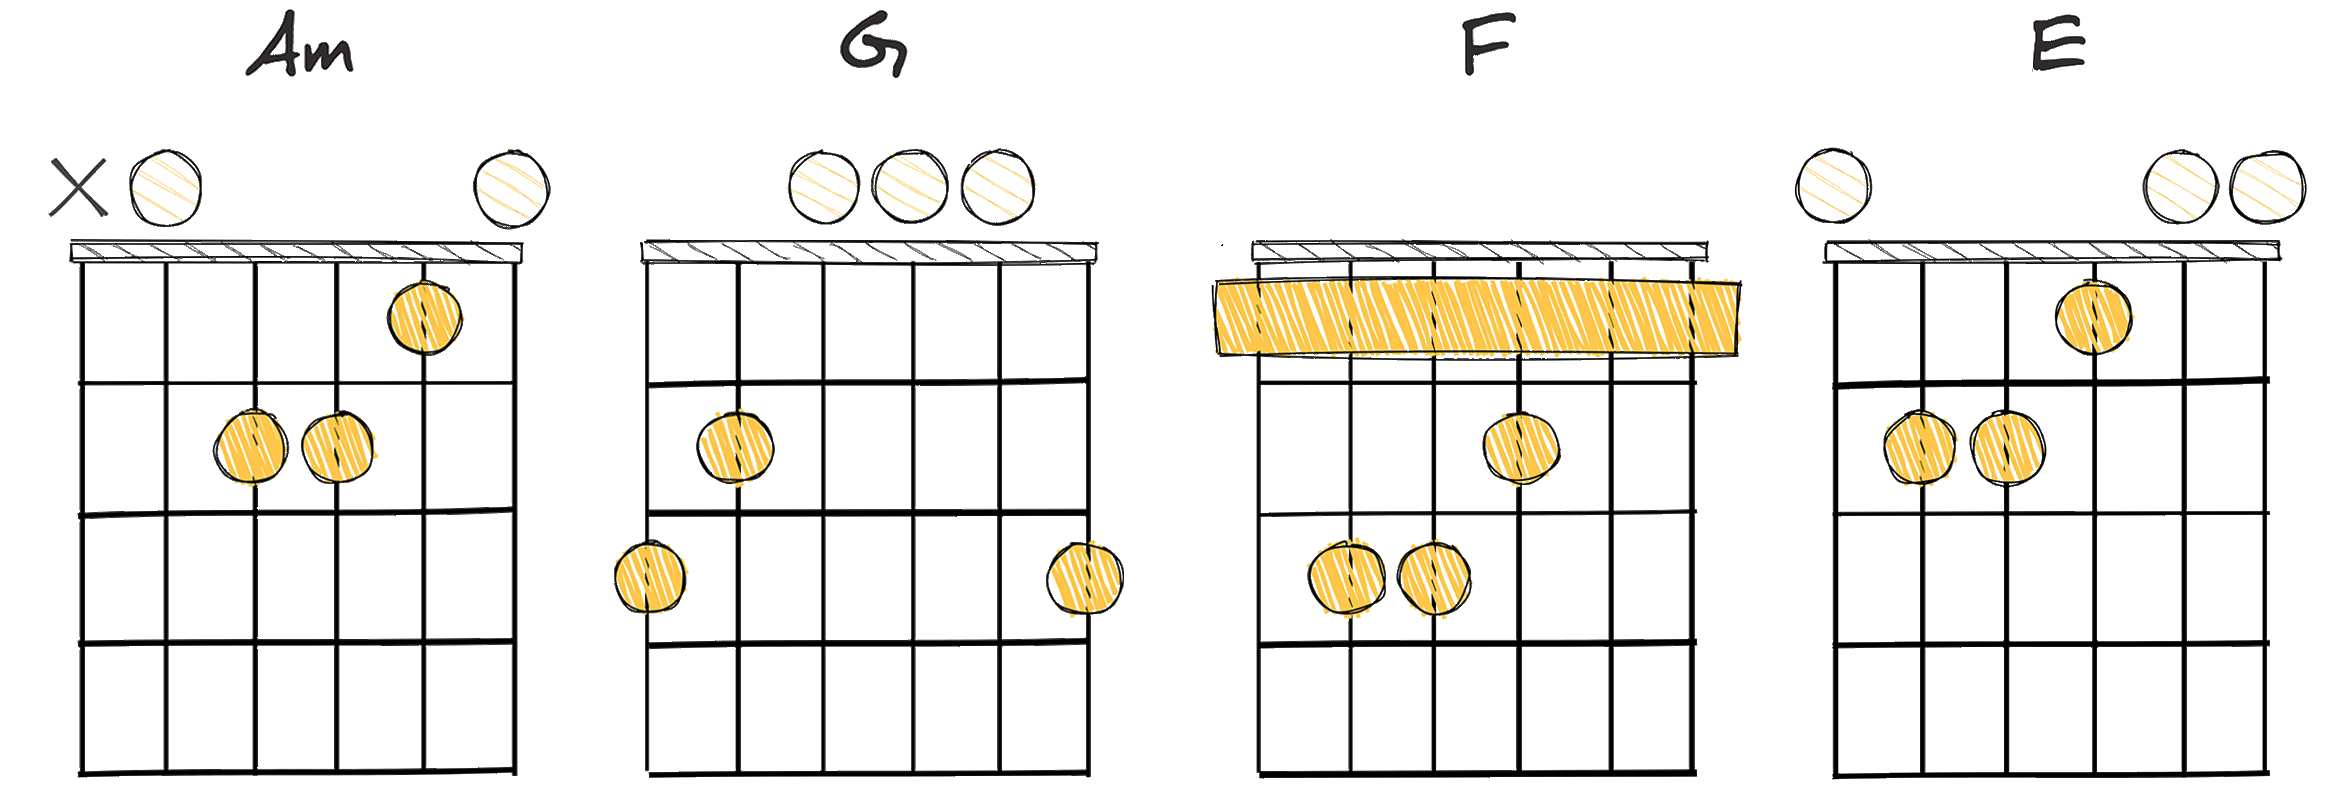 vi-V-IV-III (6-5-4-3) chords diagram